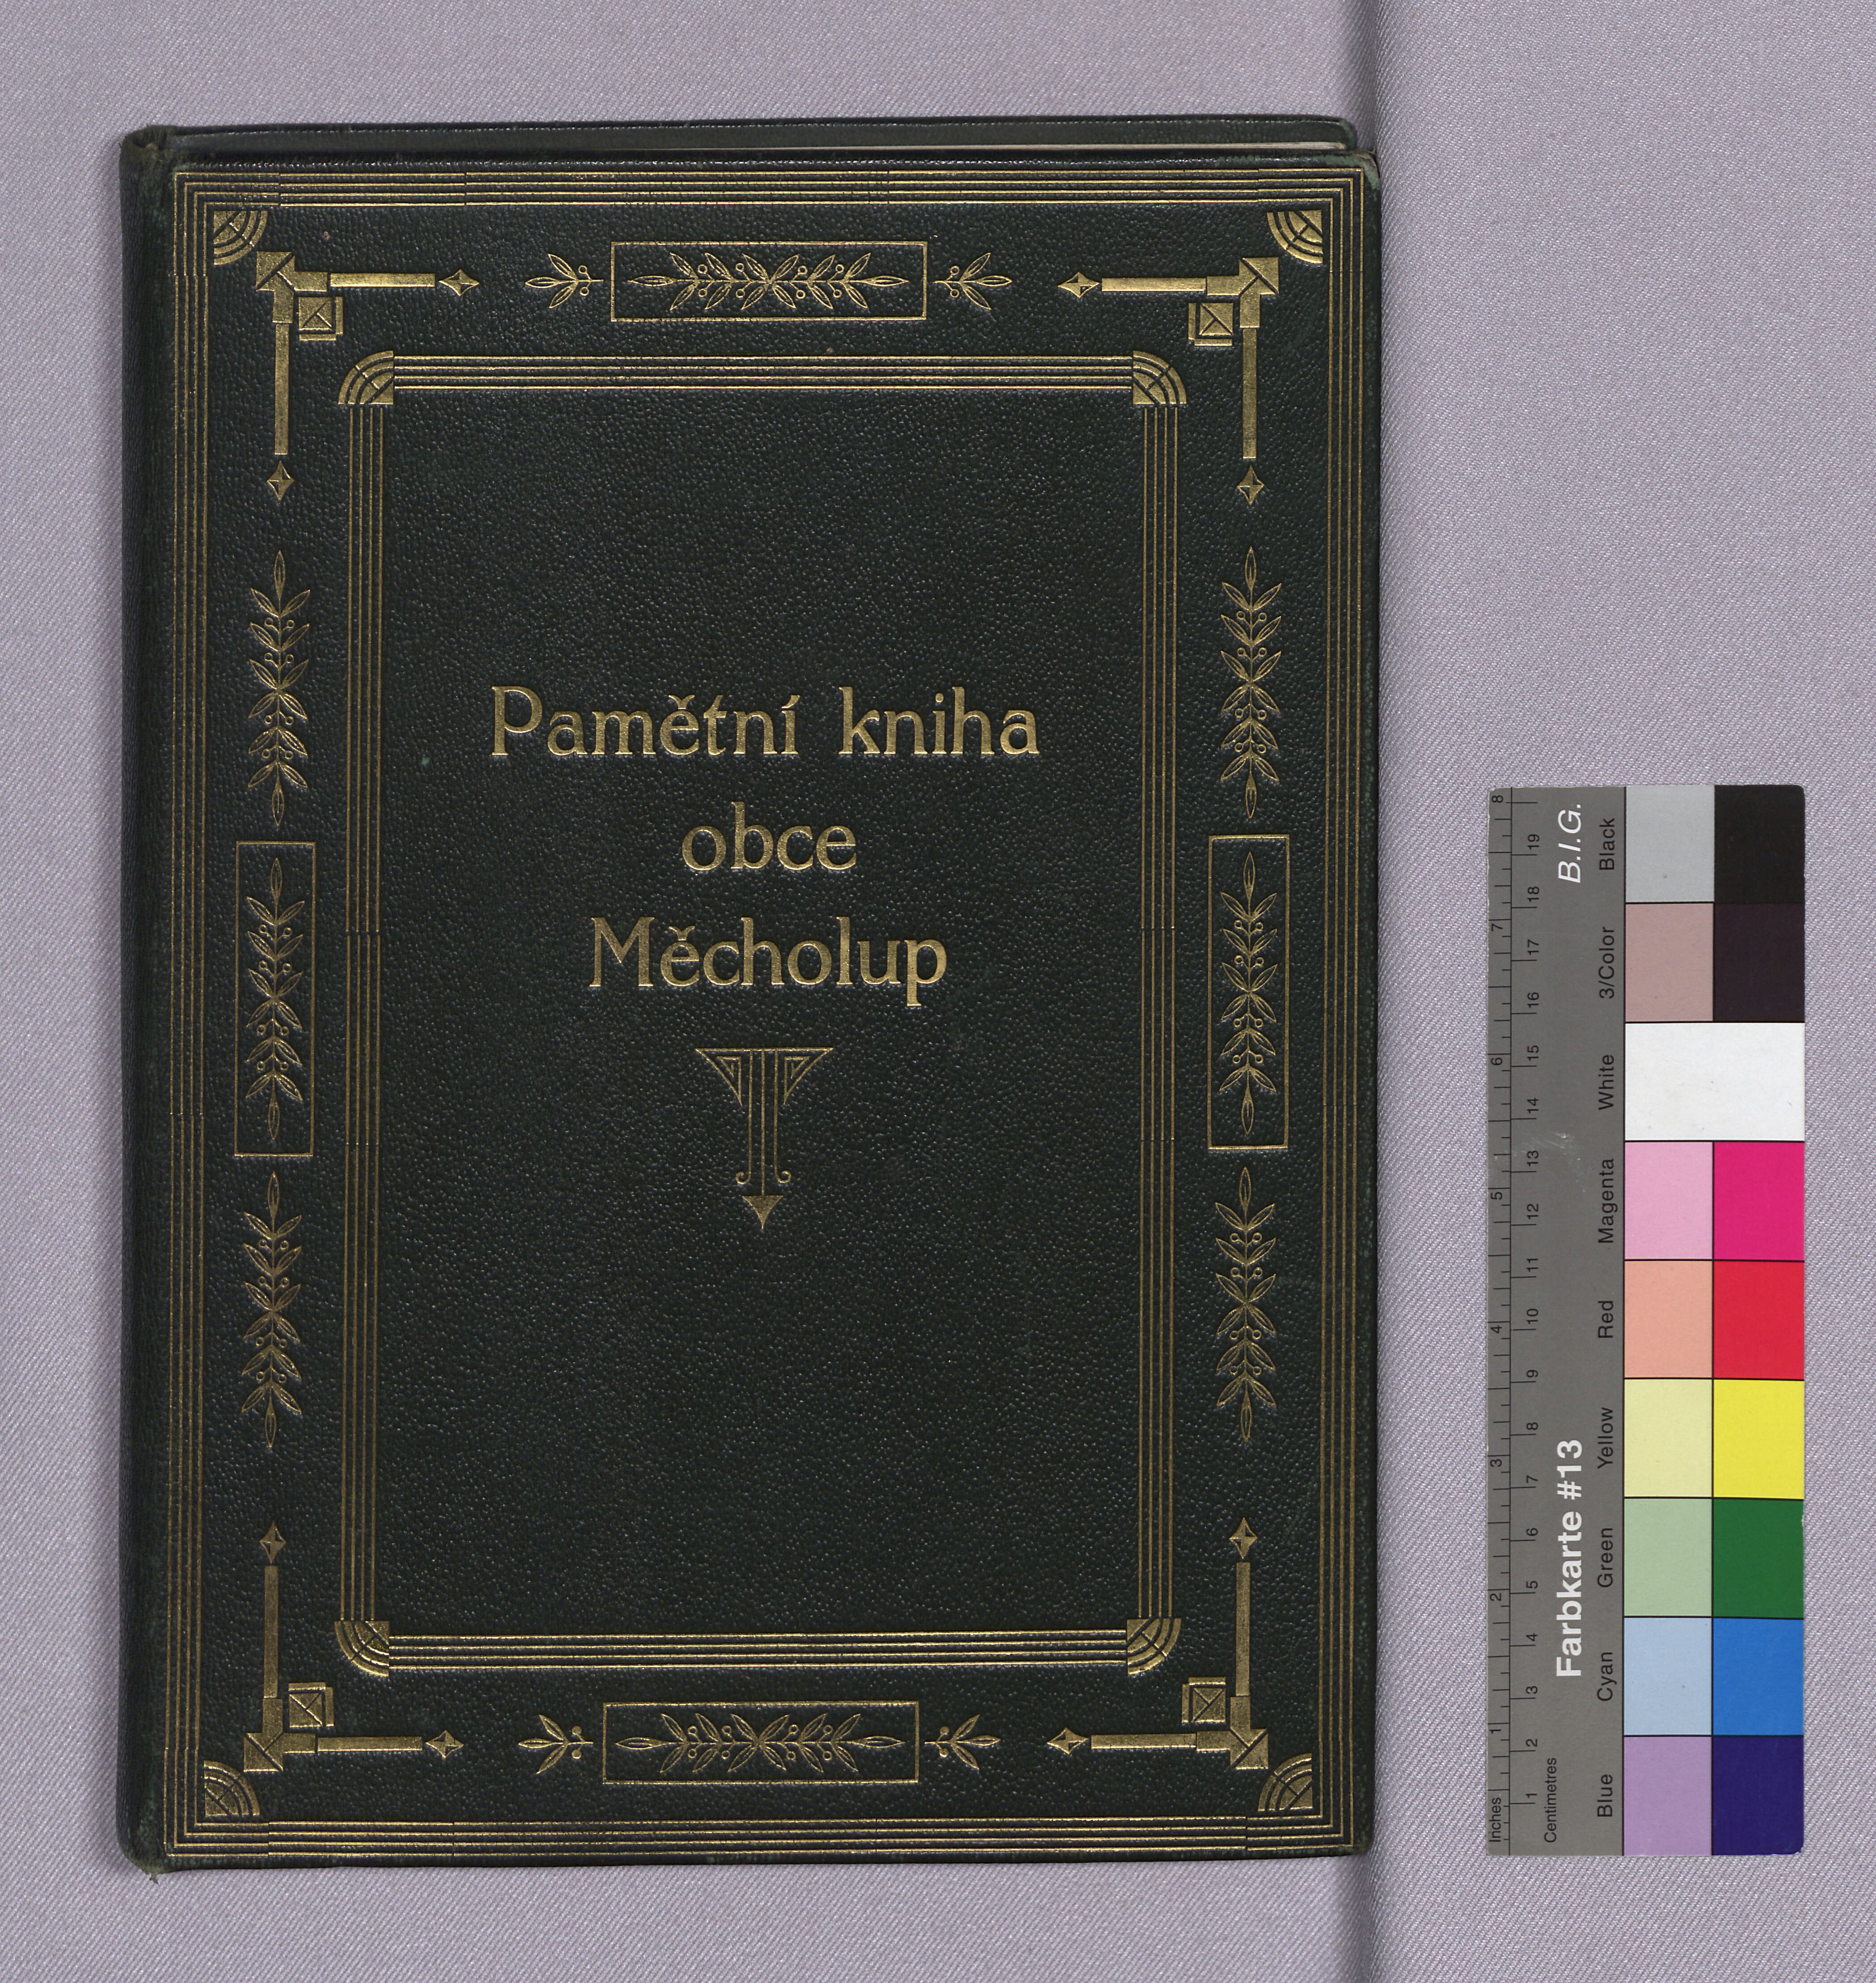 1. soap-pj_00225_obec-mecholupy-1923-1959_0010